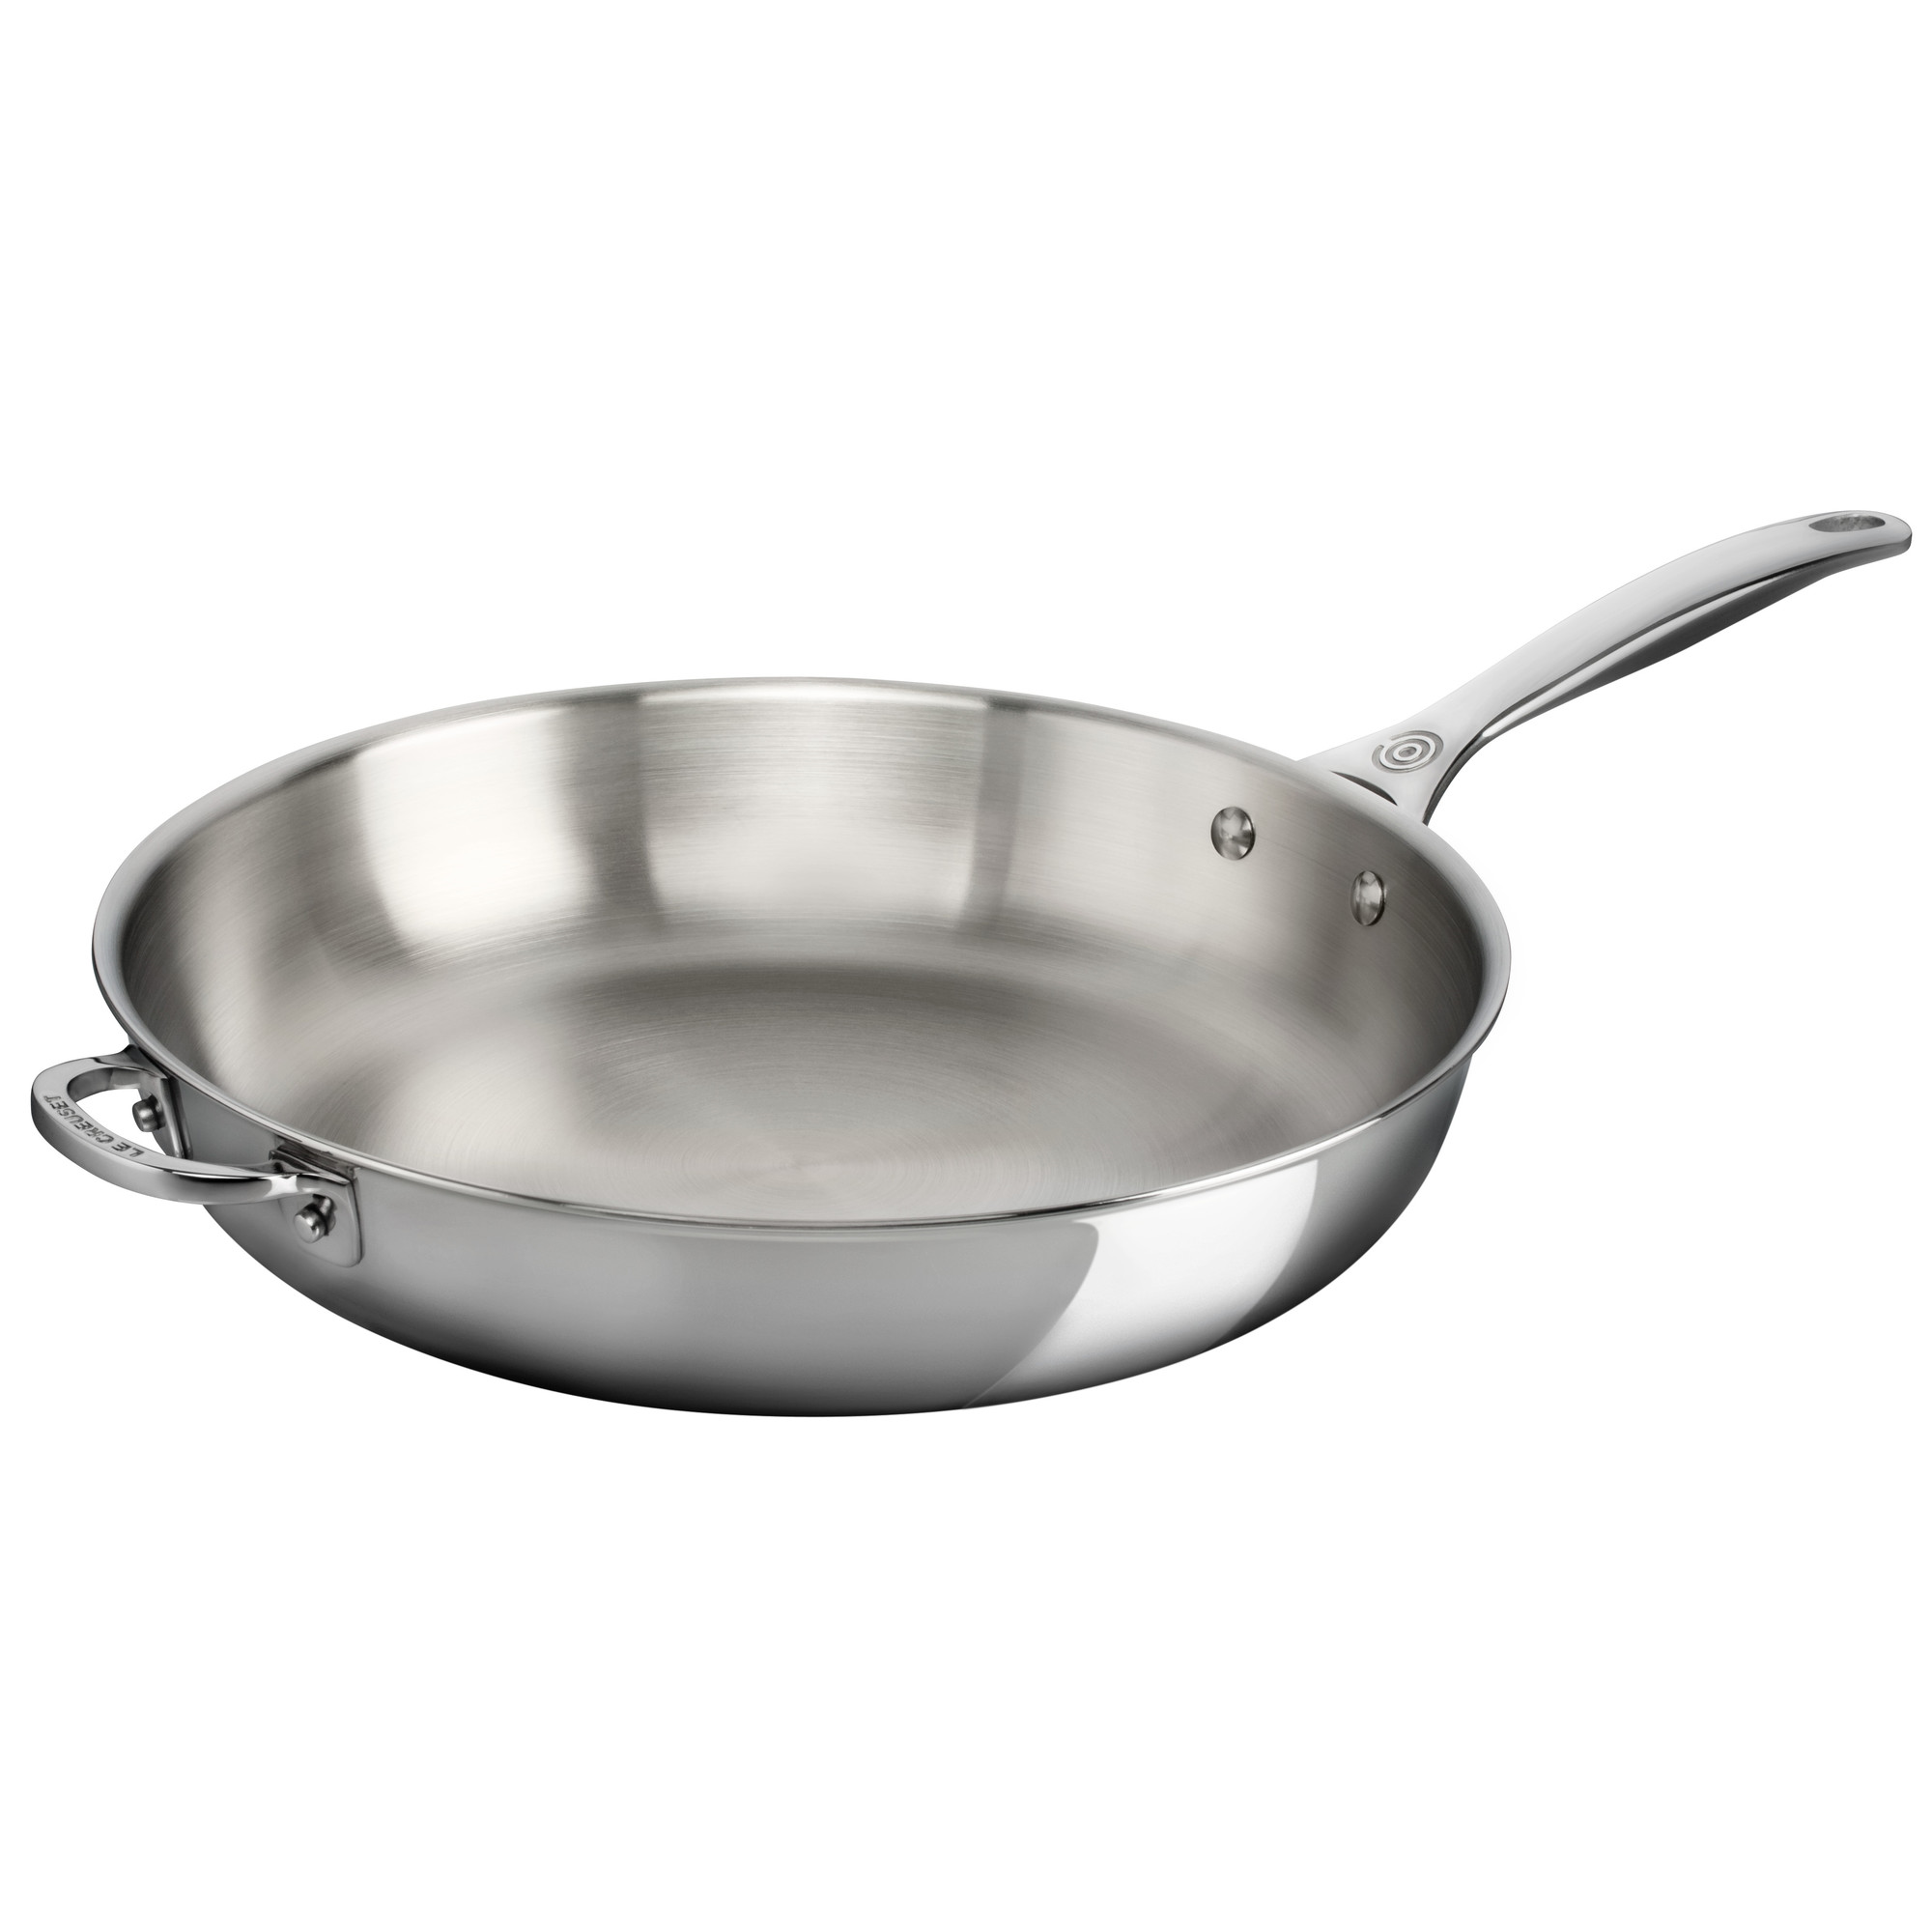 Editie Soeverein radioactiviteit Le Creuset 12.5" Stainless Steel Deep Fry Pan With Helper Handle